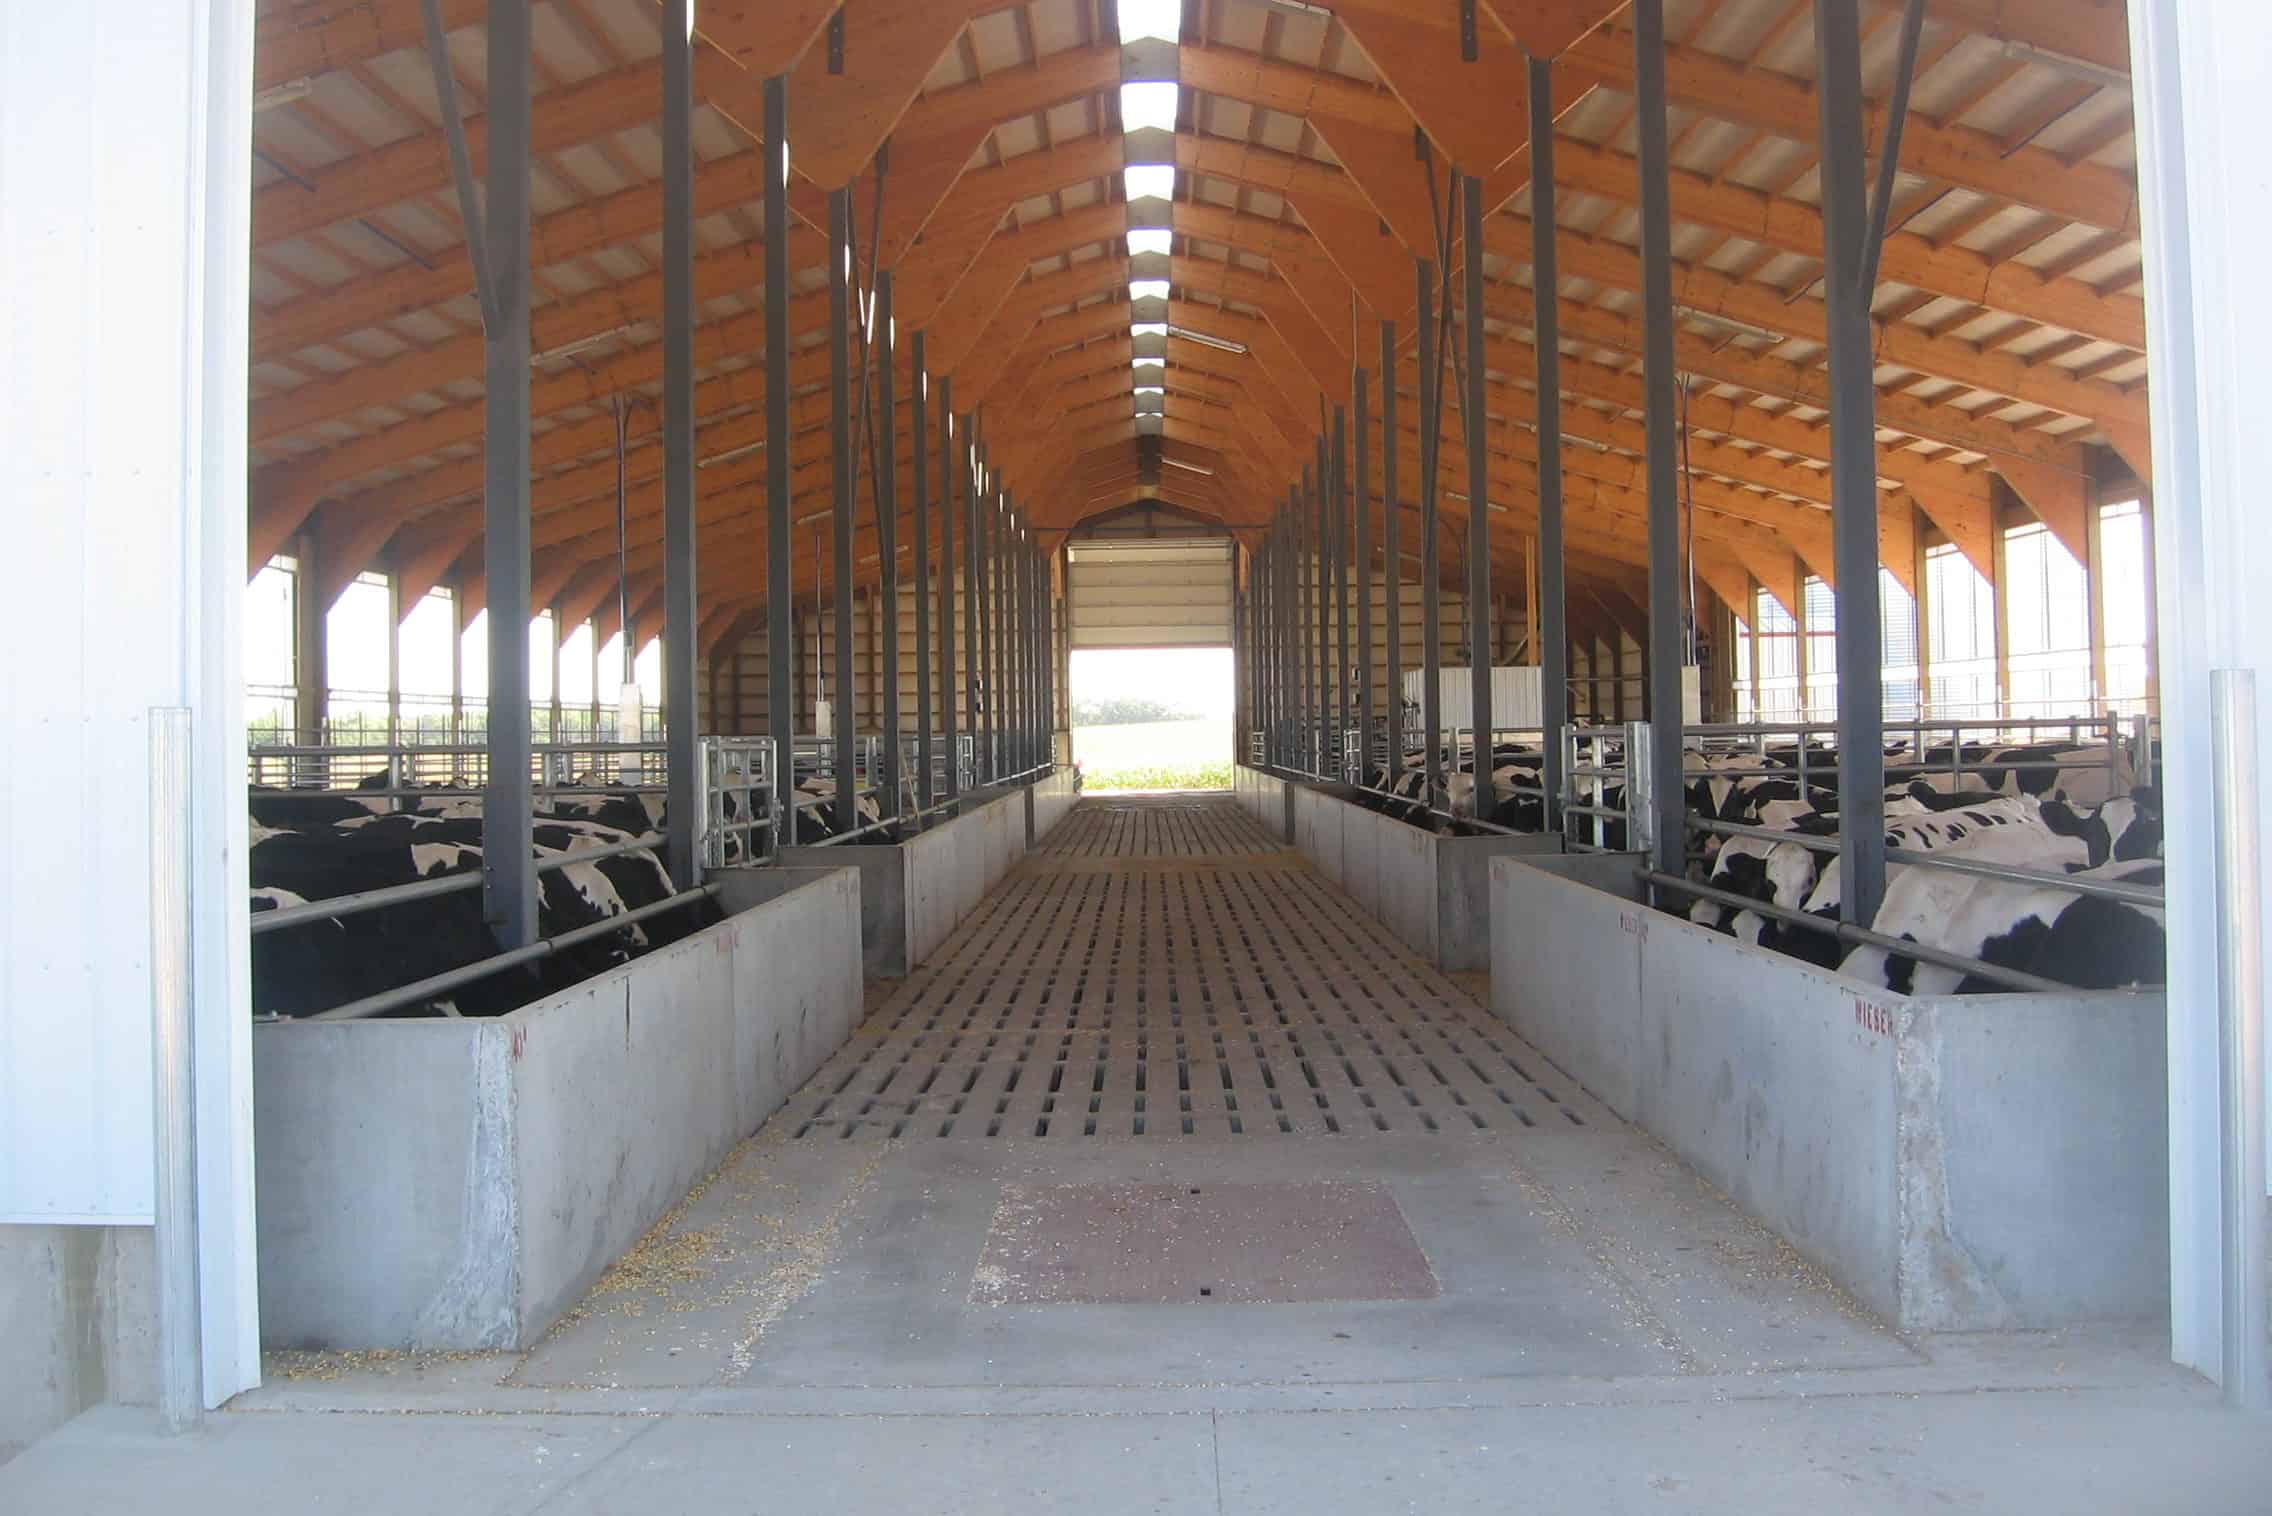 Slatted Floor Manure Storage Beef Barn Frieler Precast Concrete